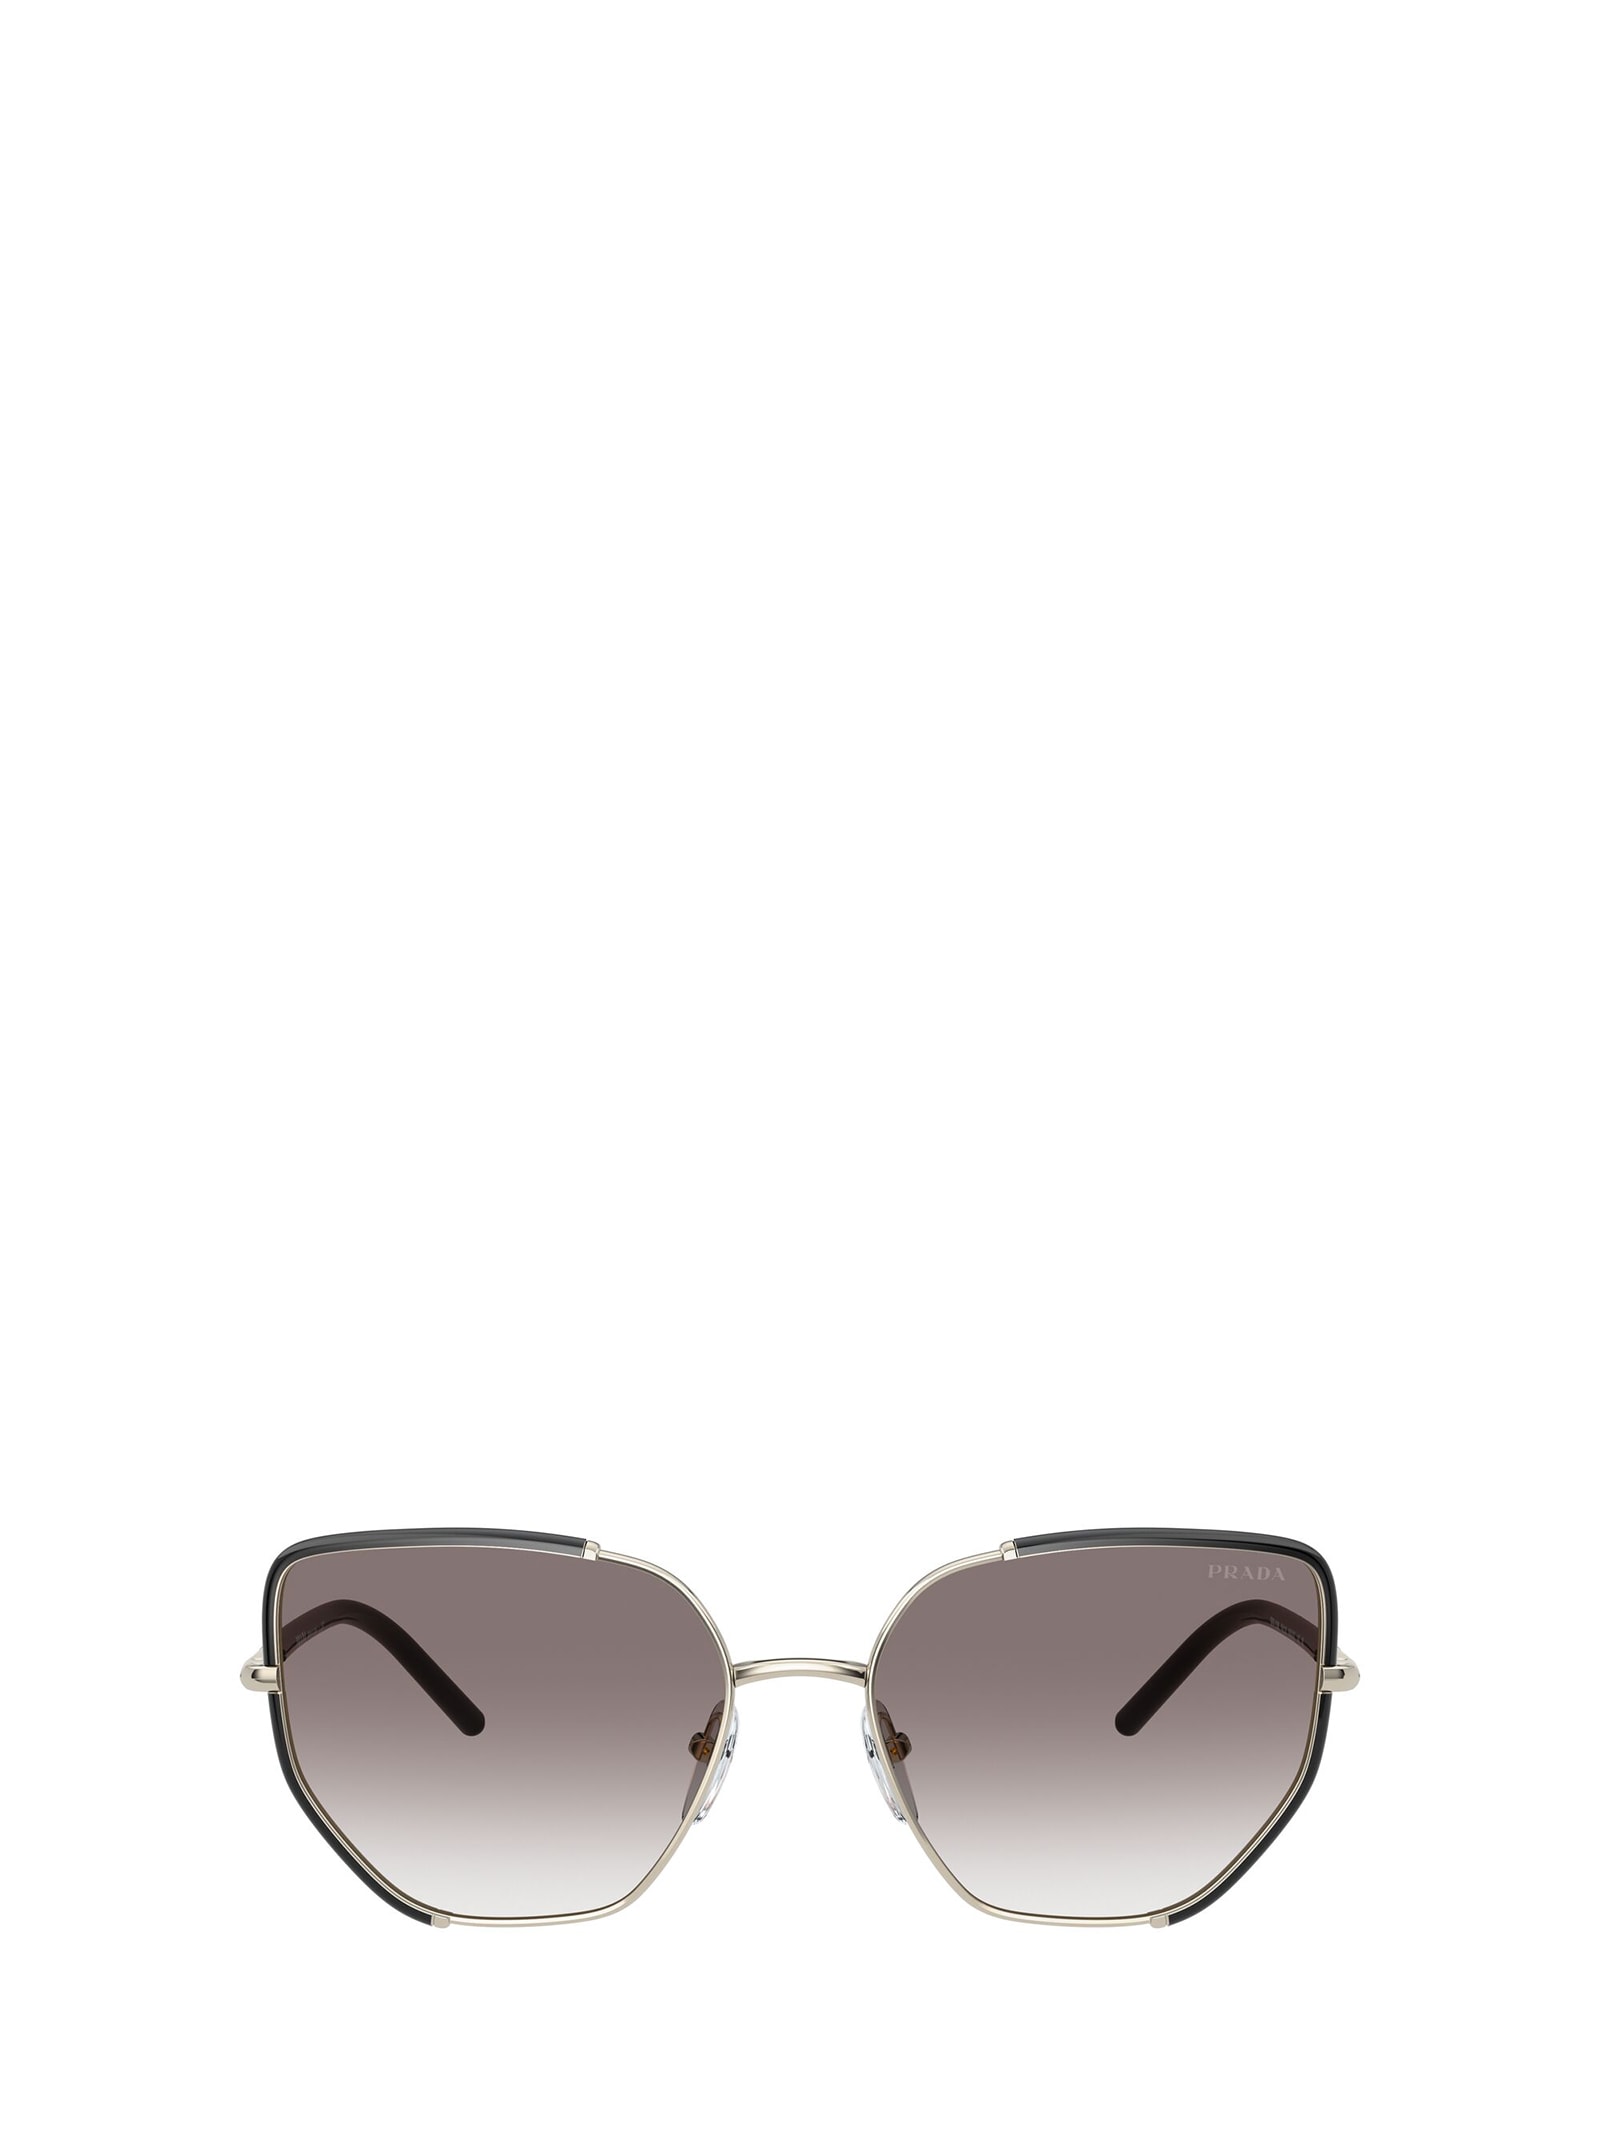 Prada Eyewear Pr 50ws Black / Pale Gold Sunglasses